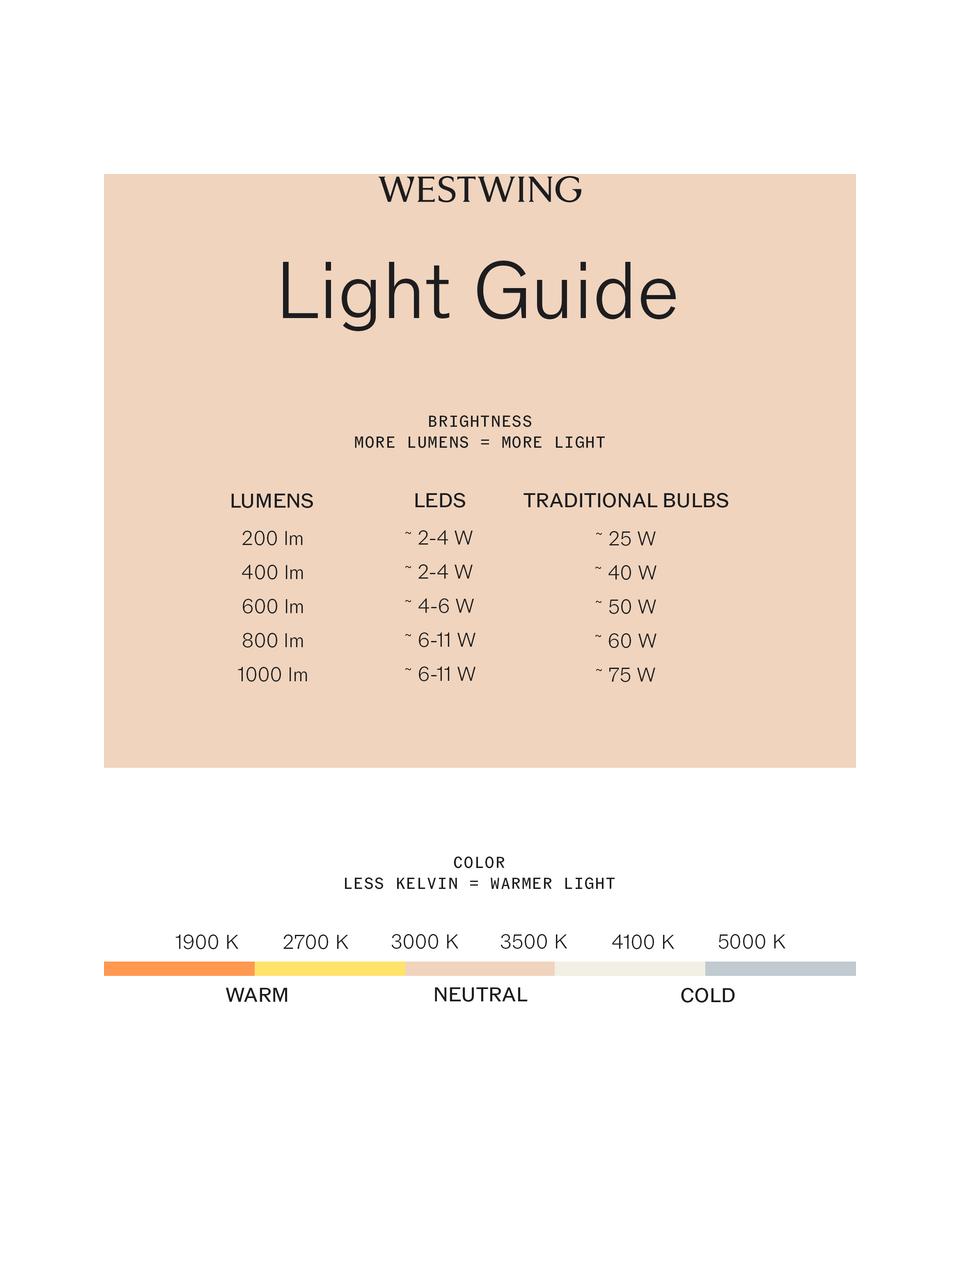 Grote LED hanglamp Billions met diffuser, Lampenkap: gepoedercoat metaal, glas, Zwart, wit, Ø 80 cm